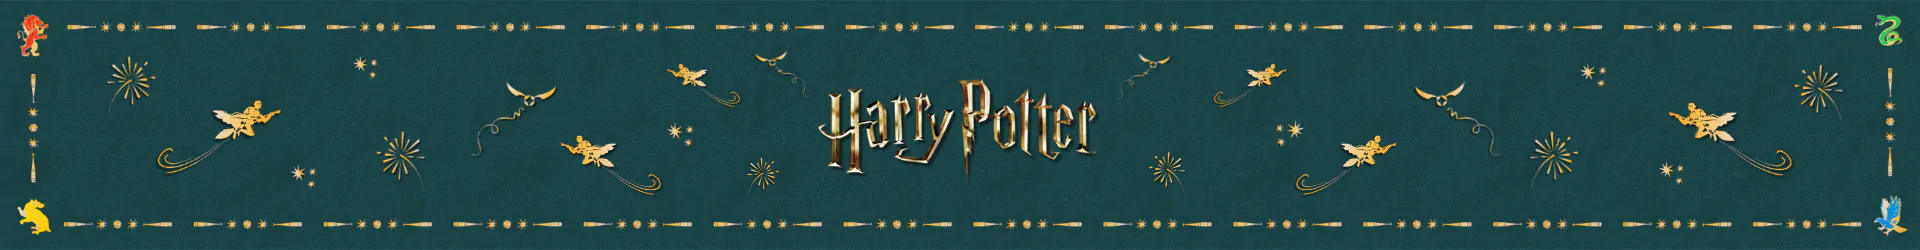 Harry Potter lingeries  banner